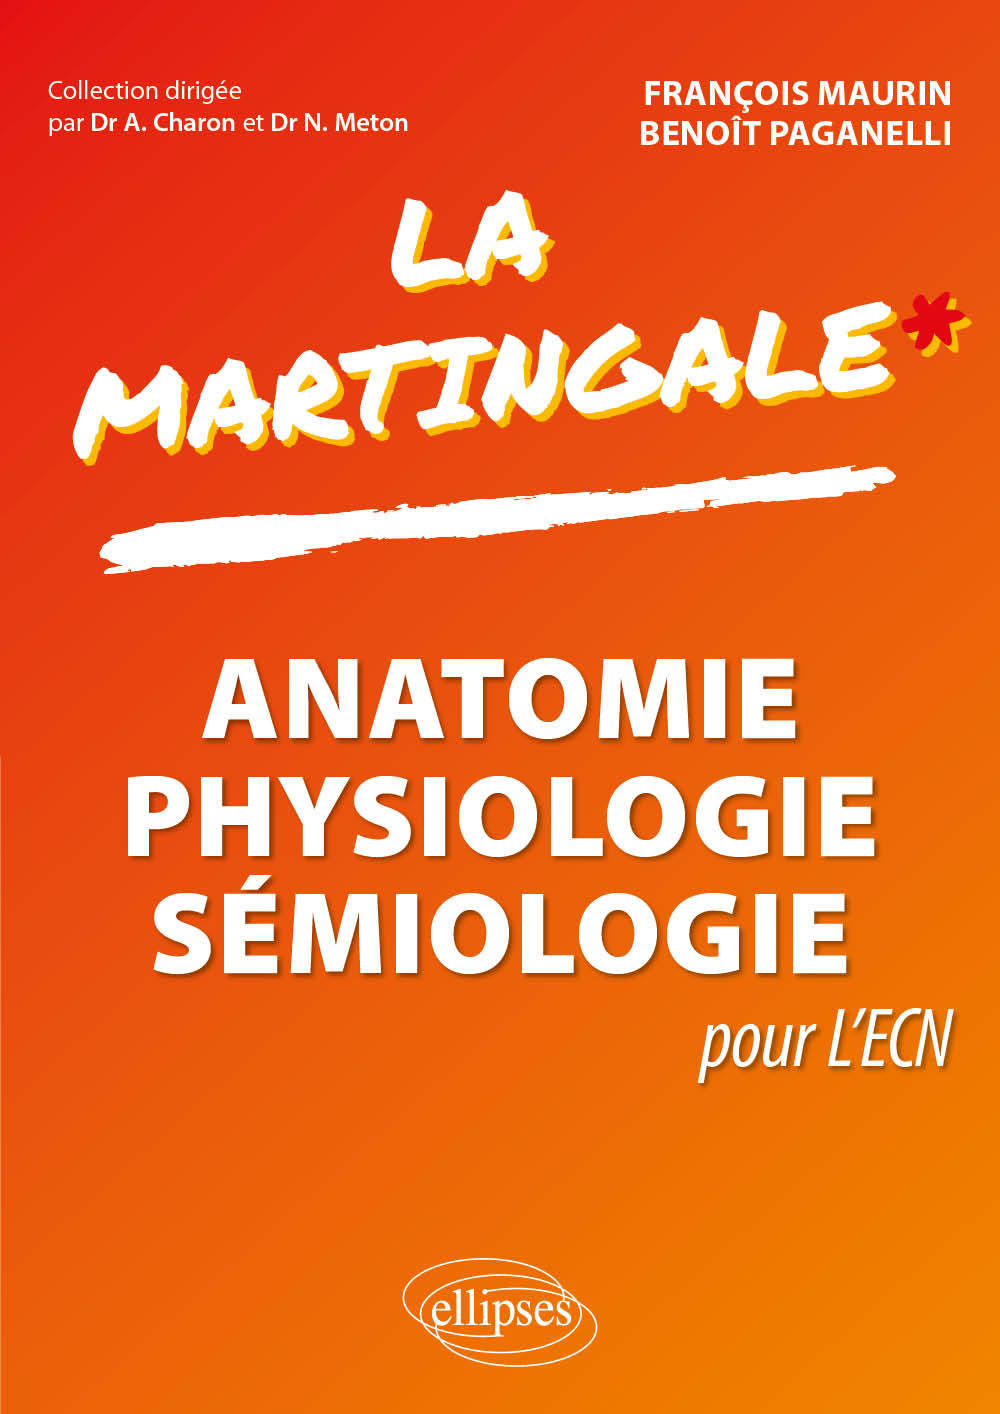 Knjiga Anatomie – Physiologie – Sémiologie pour l’EDN Maurin